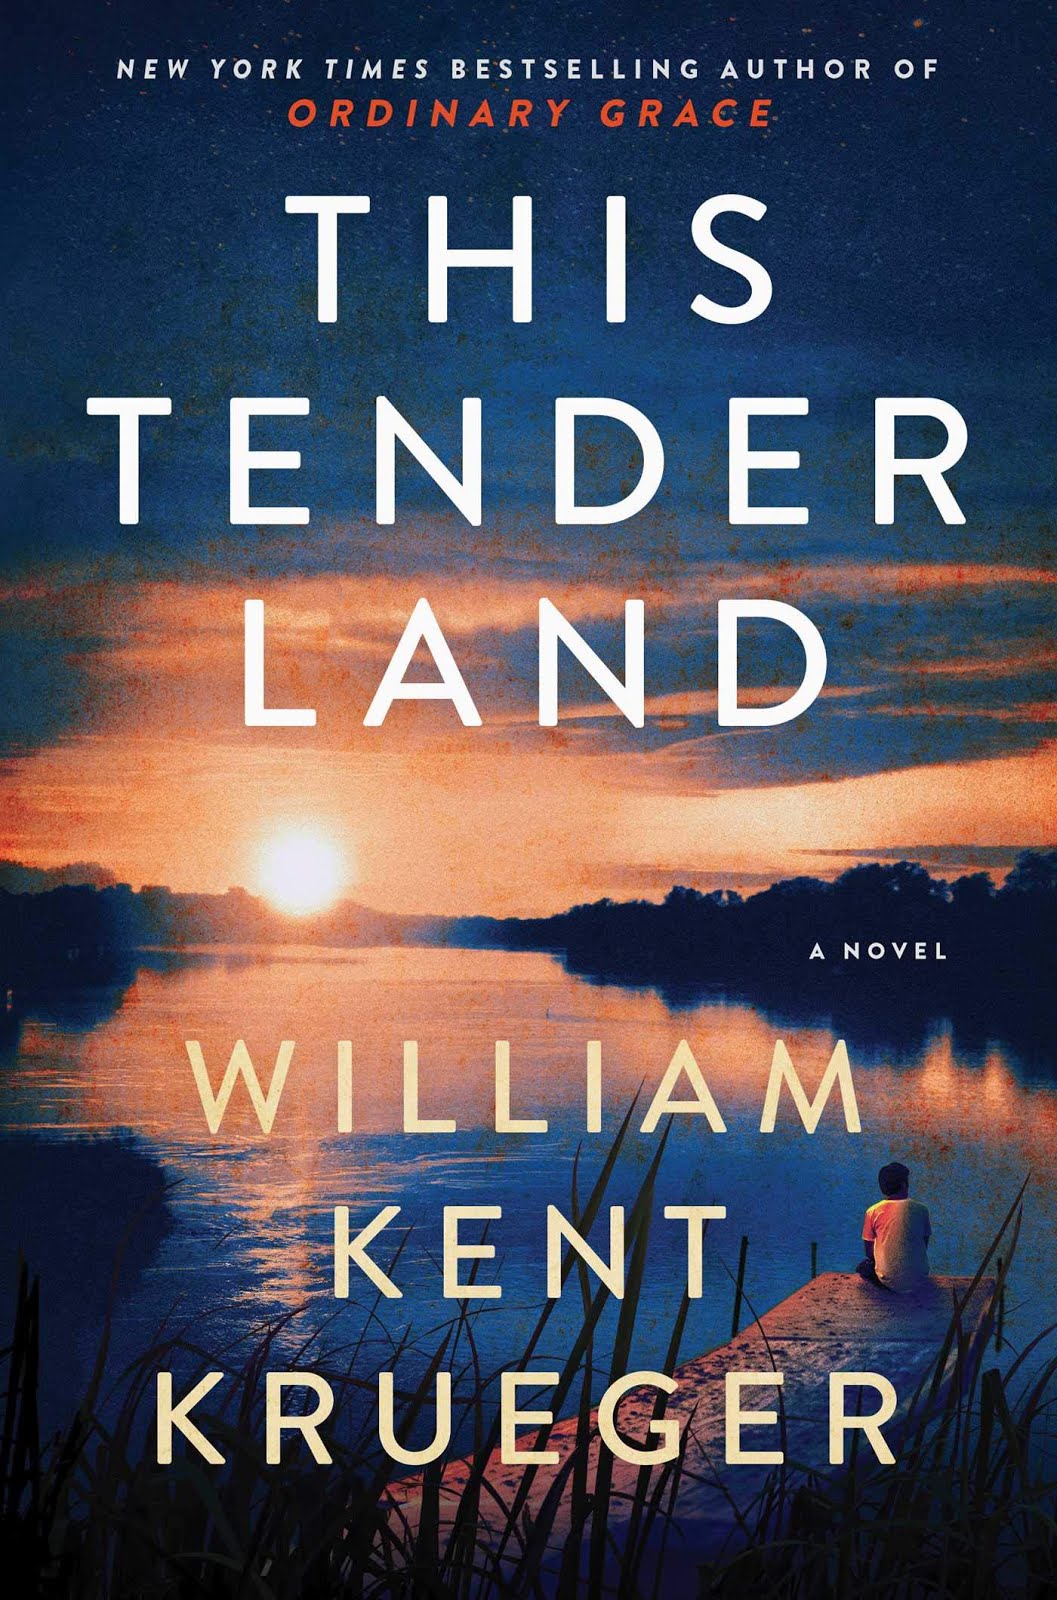 This Tender Land, an epic novel by William Kent Krueger